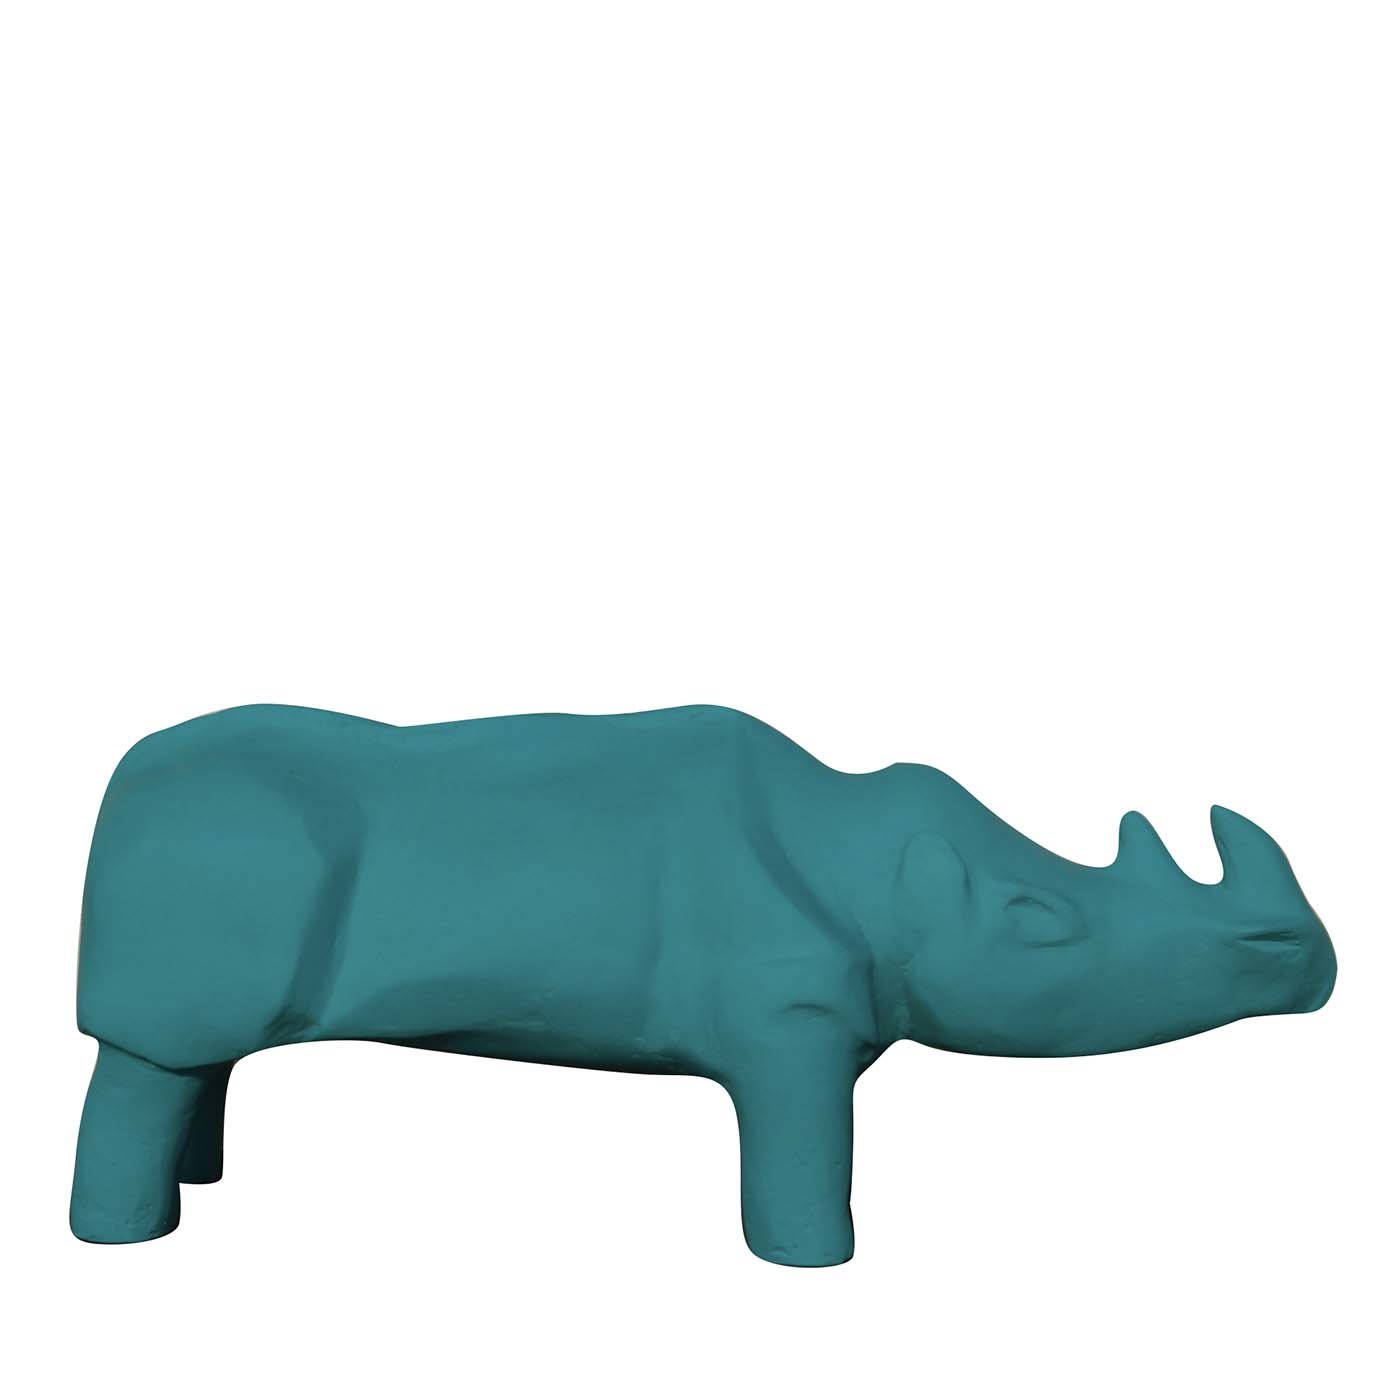 Prehistoric Rhino Sculpture - Daniele Nannini